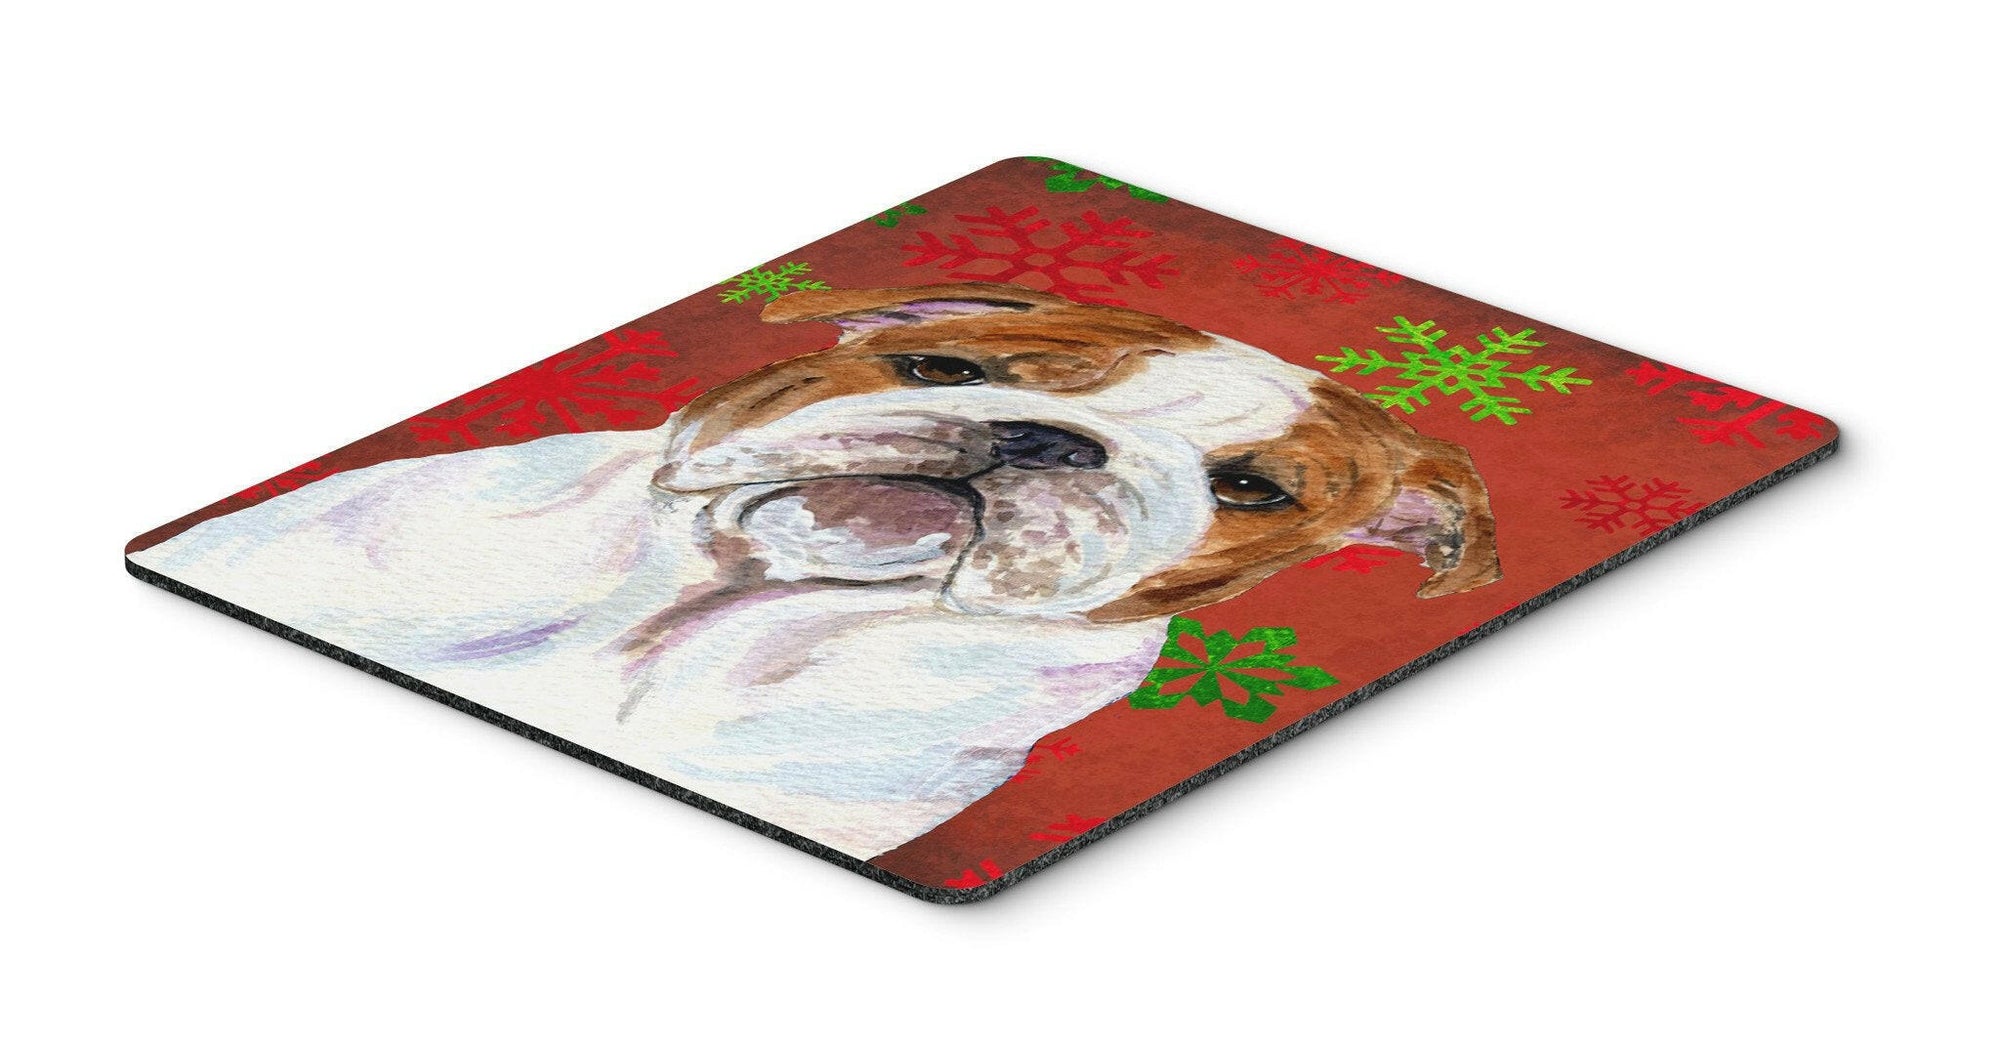 Bulldog English Red and Green Snowflakes Christmas Mouse Pad, Hot Pad or Trivet by Caroline's Treasures